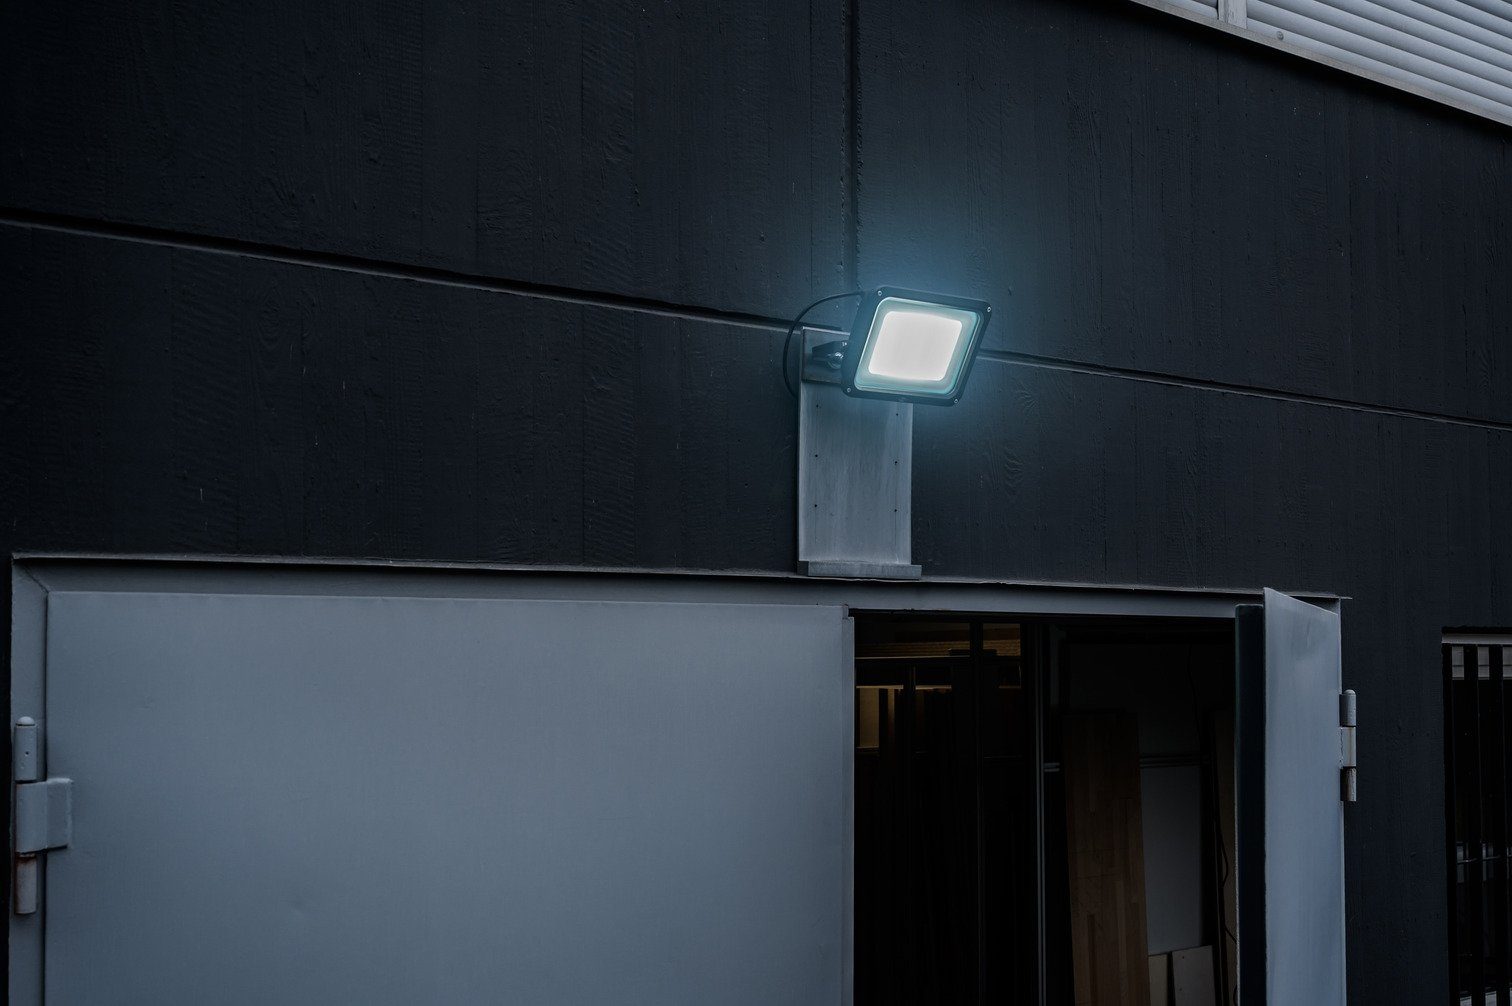 Brennenstuhl JARO LED Wandstrahler 50 für 7060, integriert, außen LED fest W,